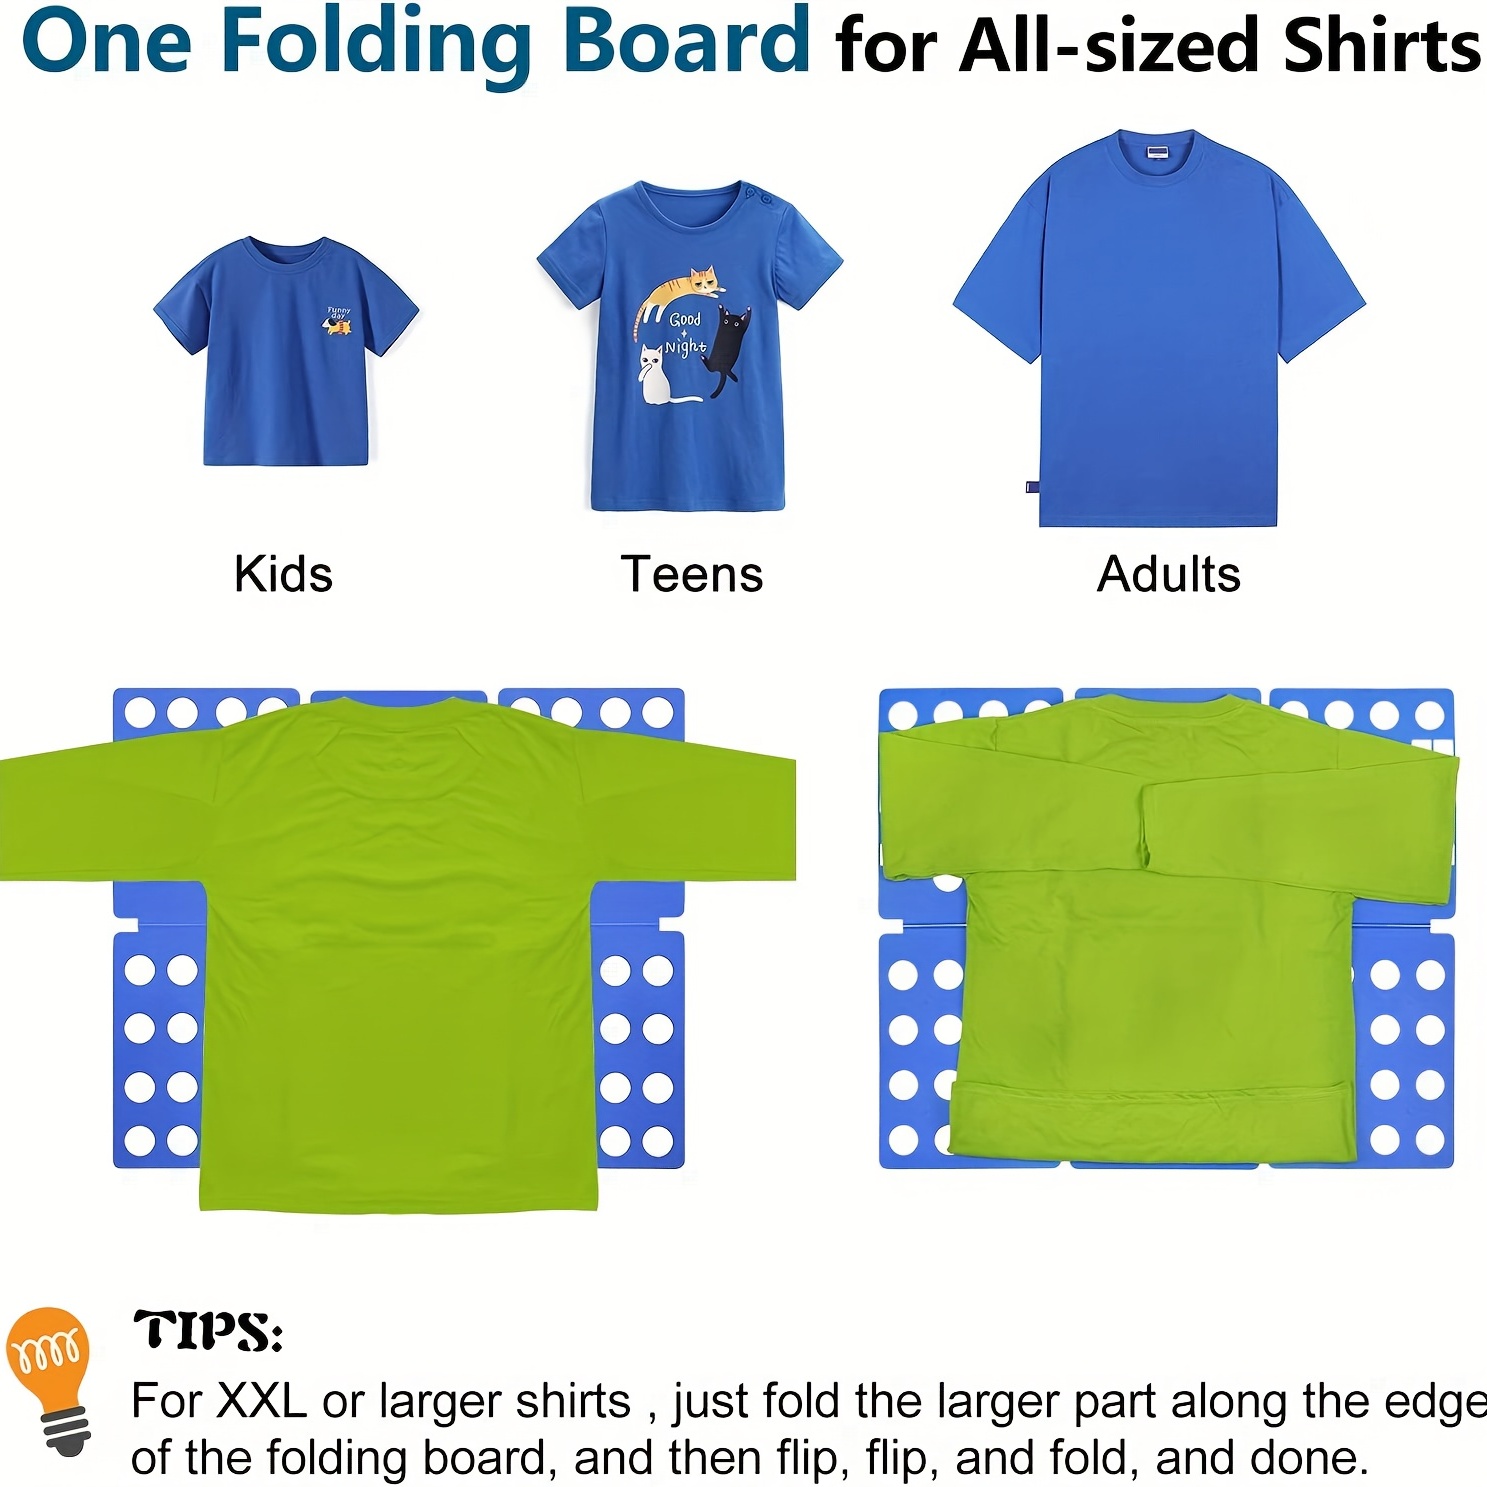 Economy Adult Shirt Folding Board - Shirt Folding Board - T Shirt